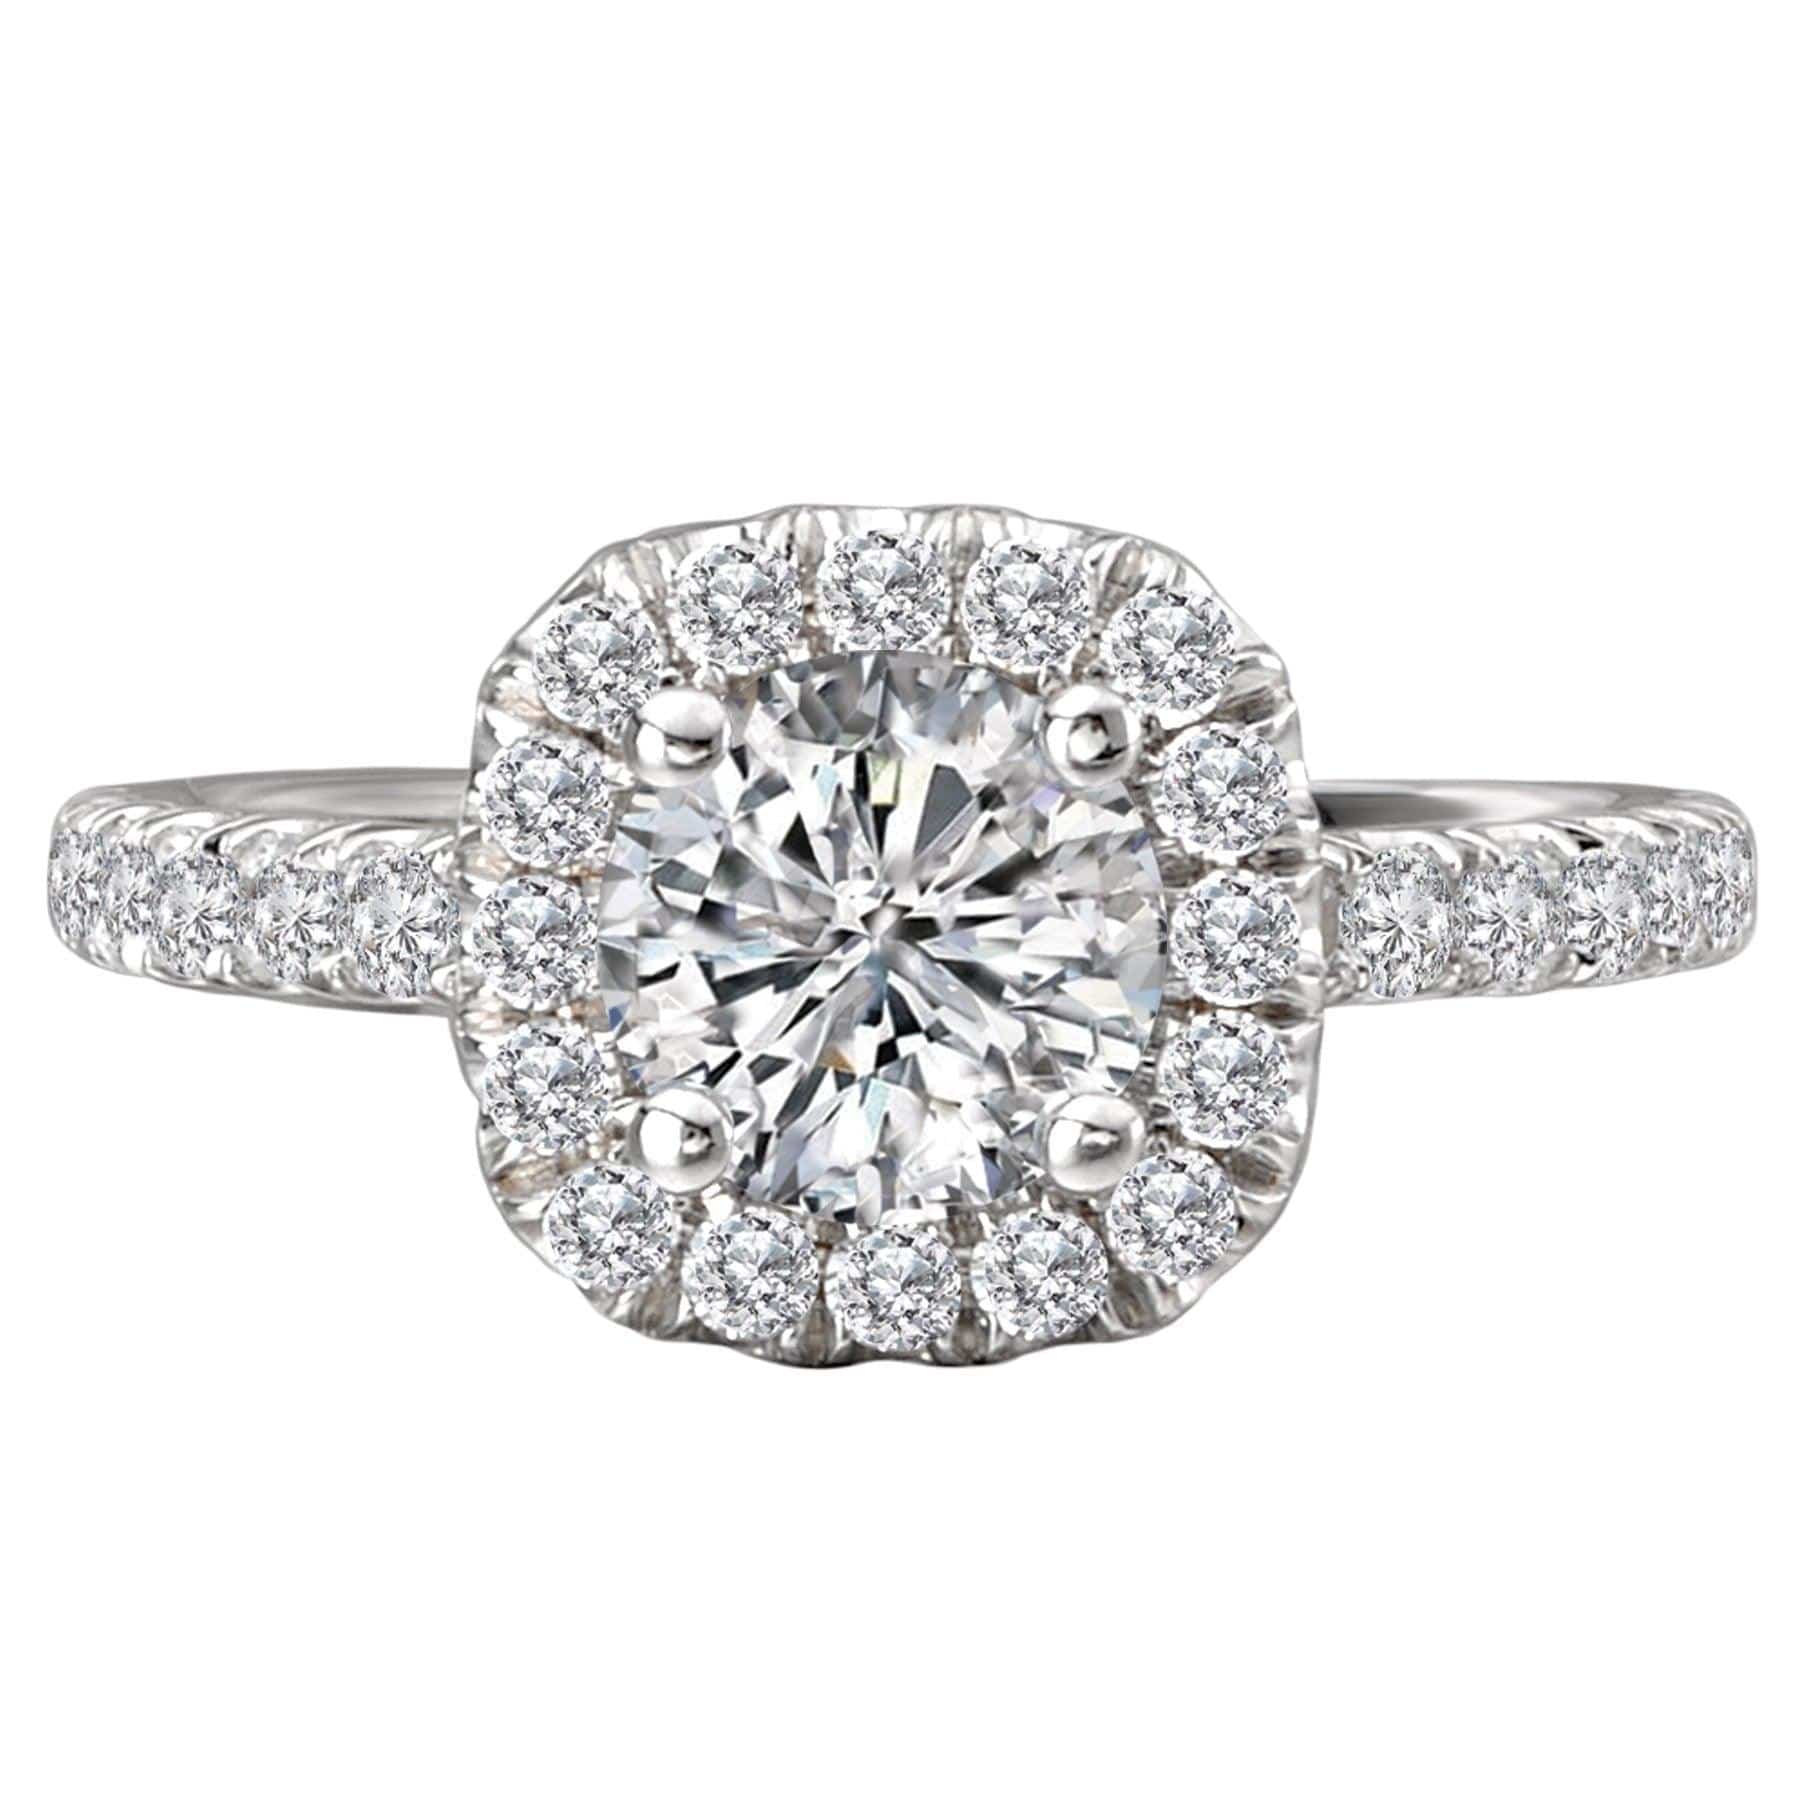 BW JAMES Engagement Rings "The Dallas" Halo Semi-Mount Diamond Ring